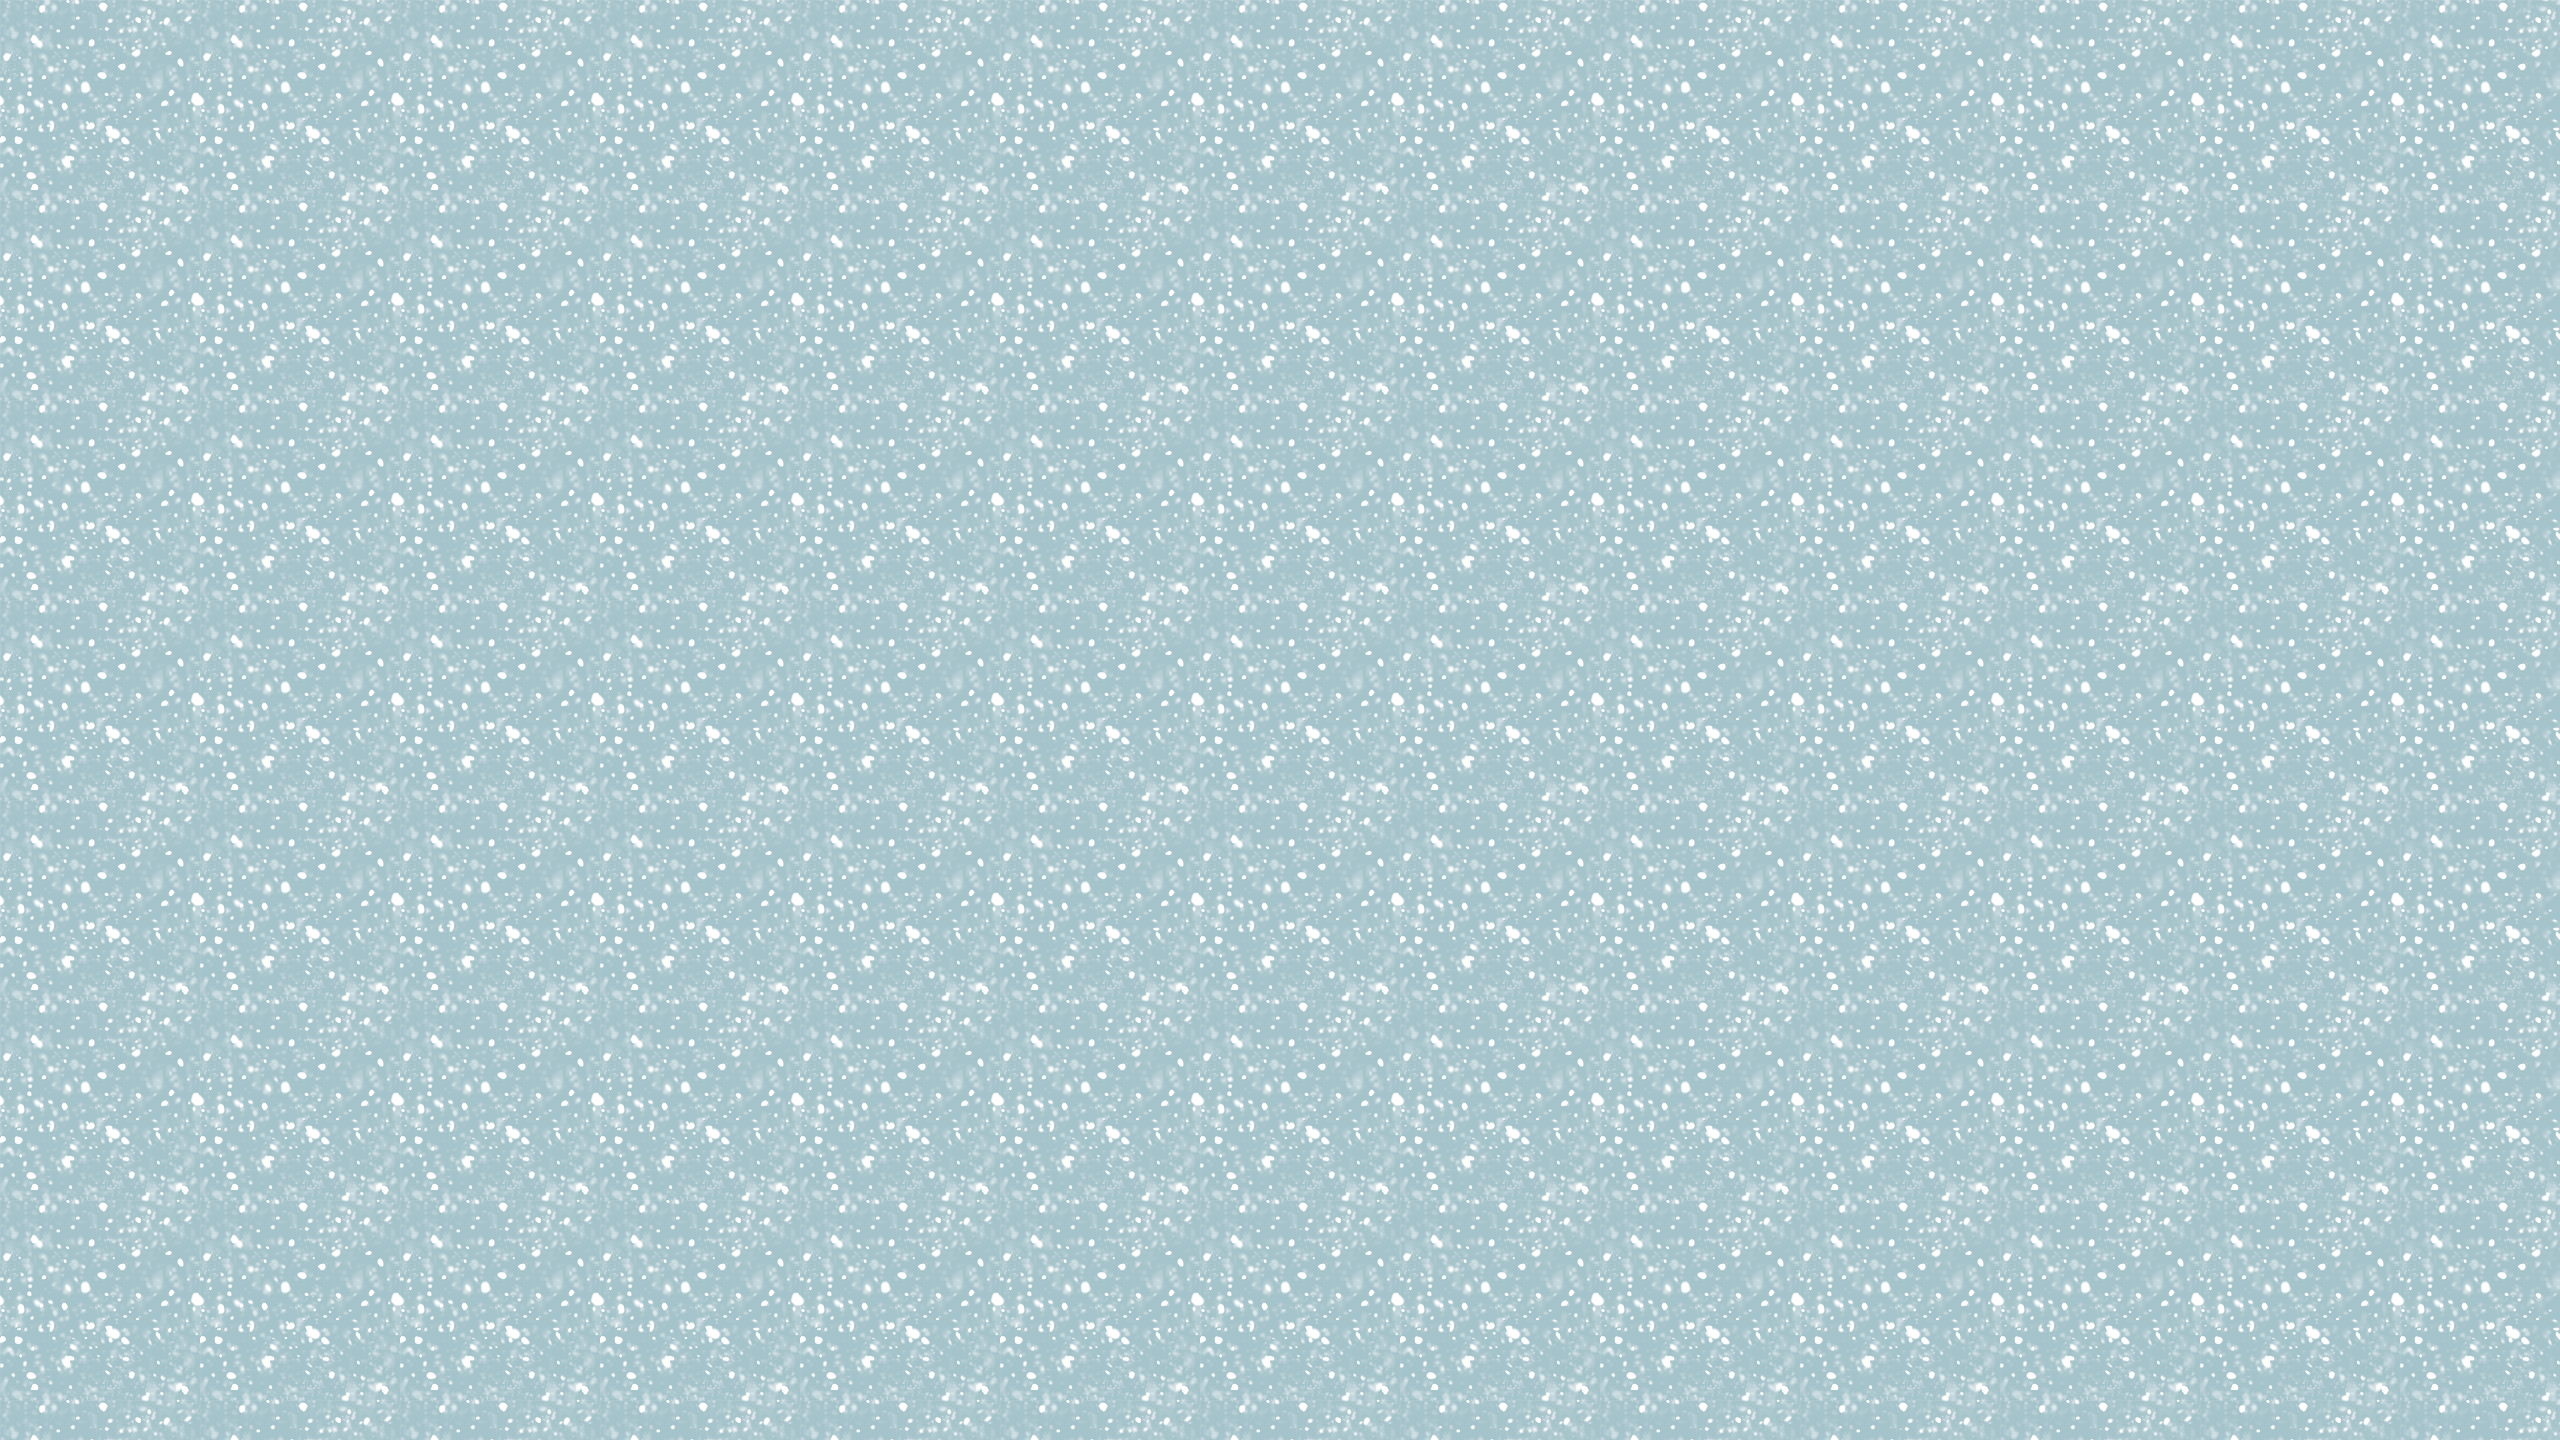 2560x1440 Christmas wallpaper moving snow falling wallpapersafari. Download